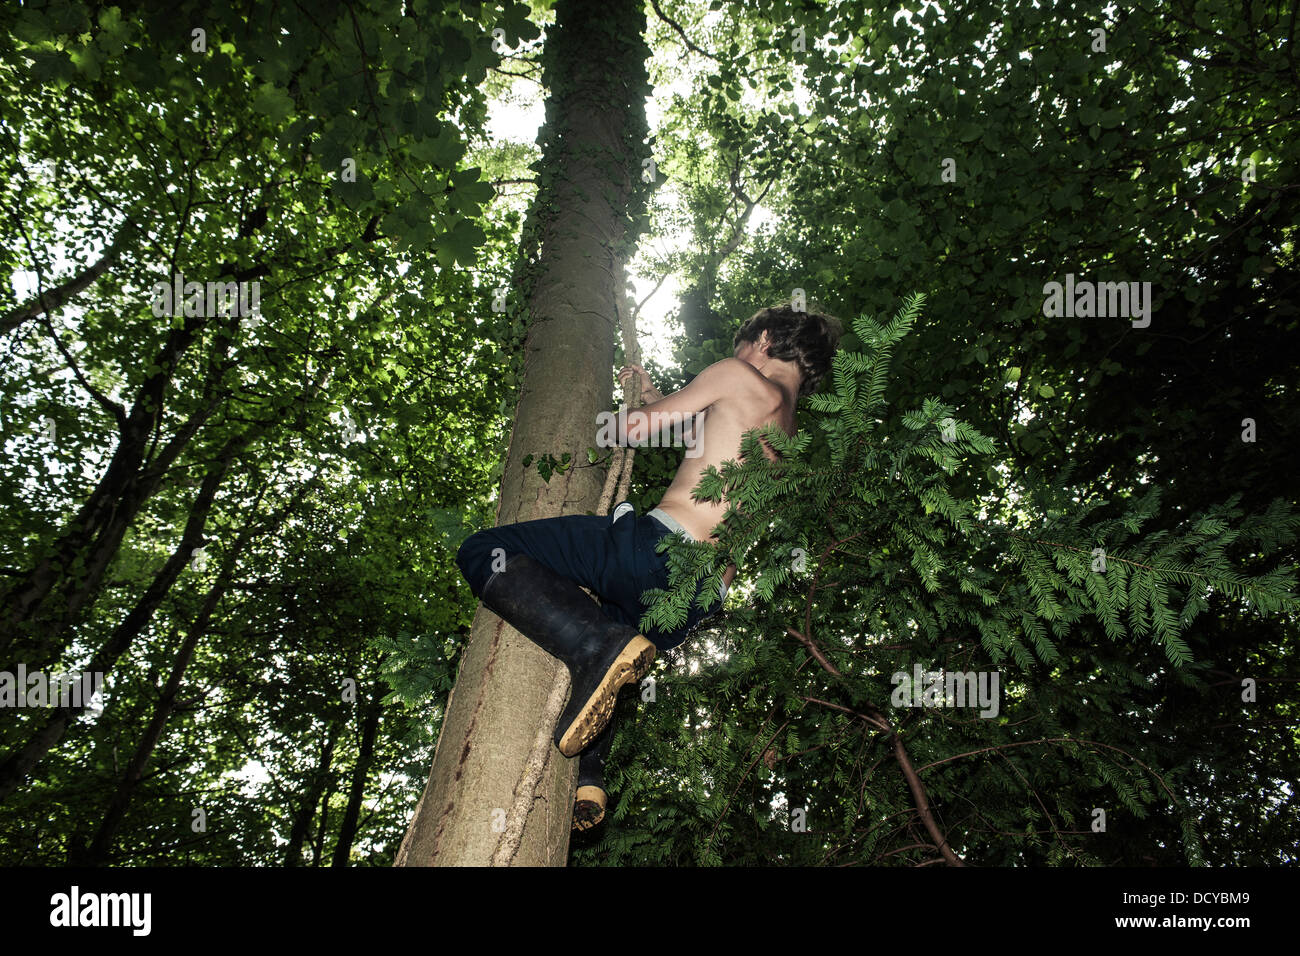 young boy climbing tree Stock Photo